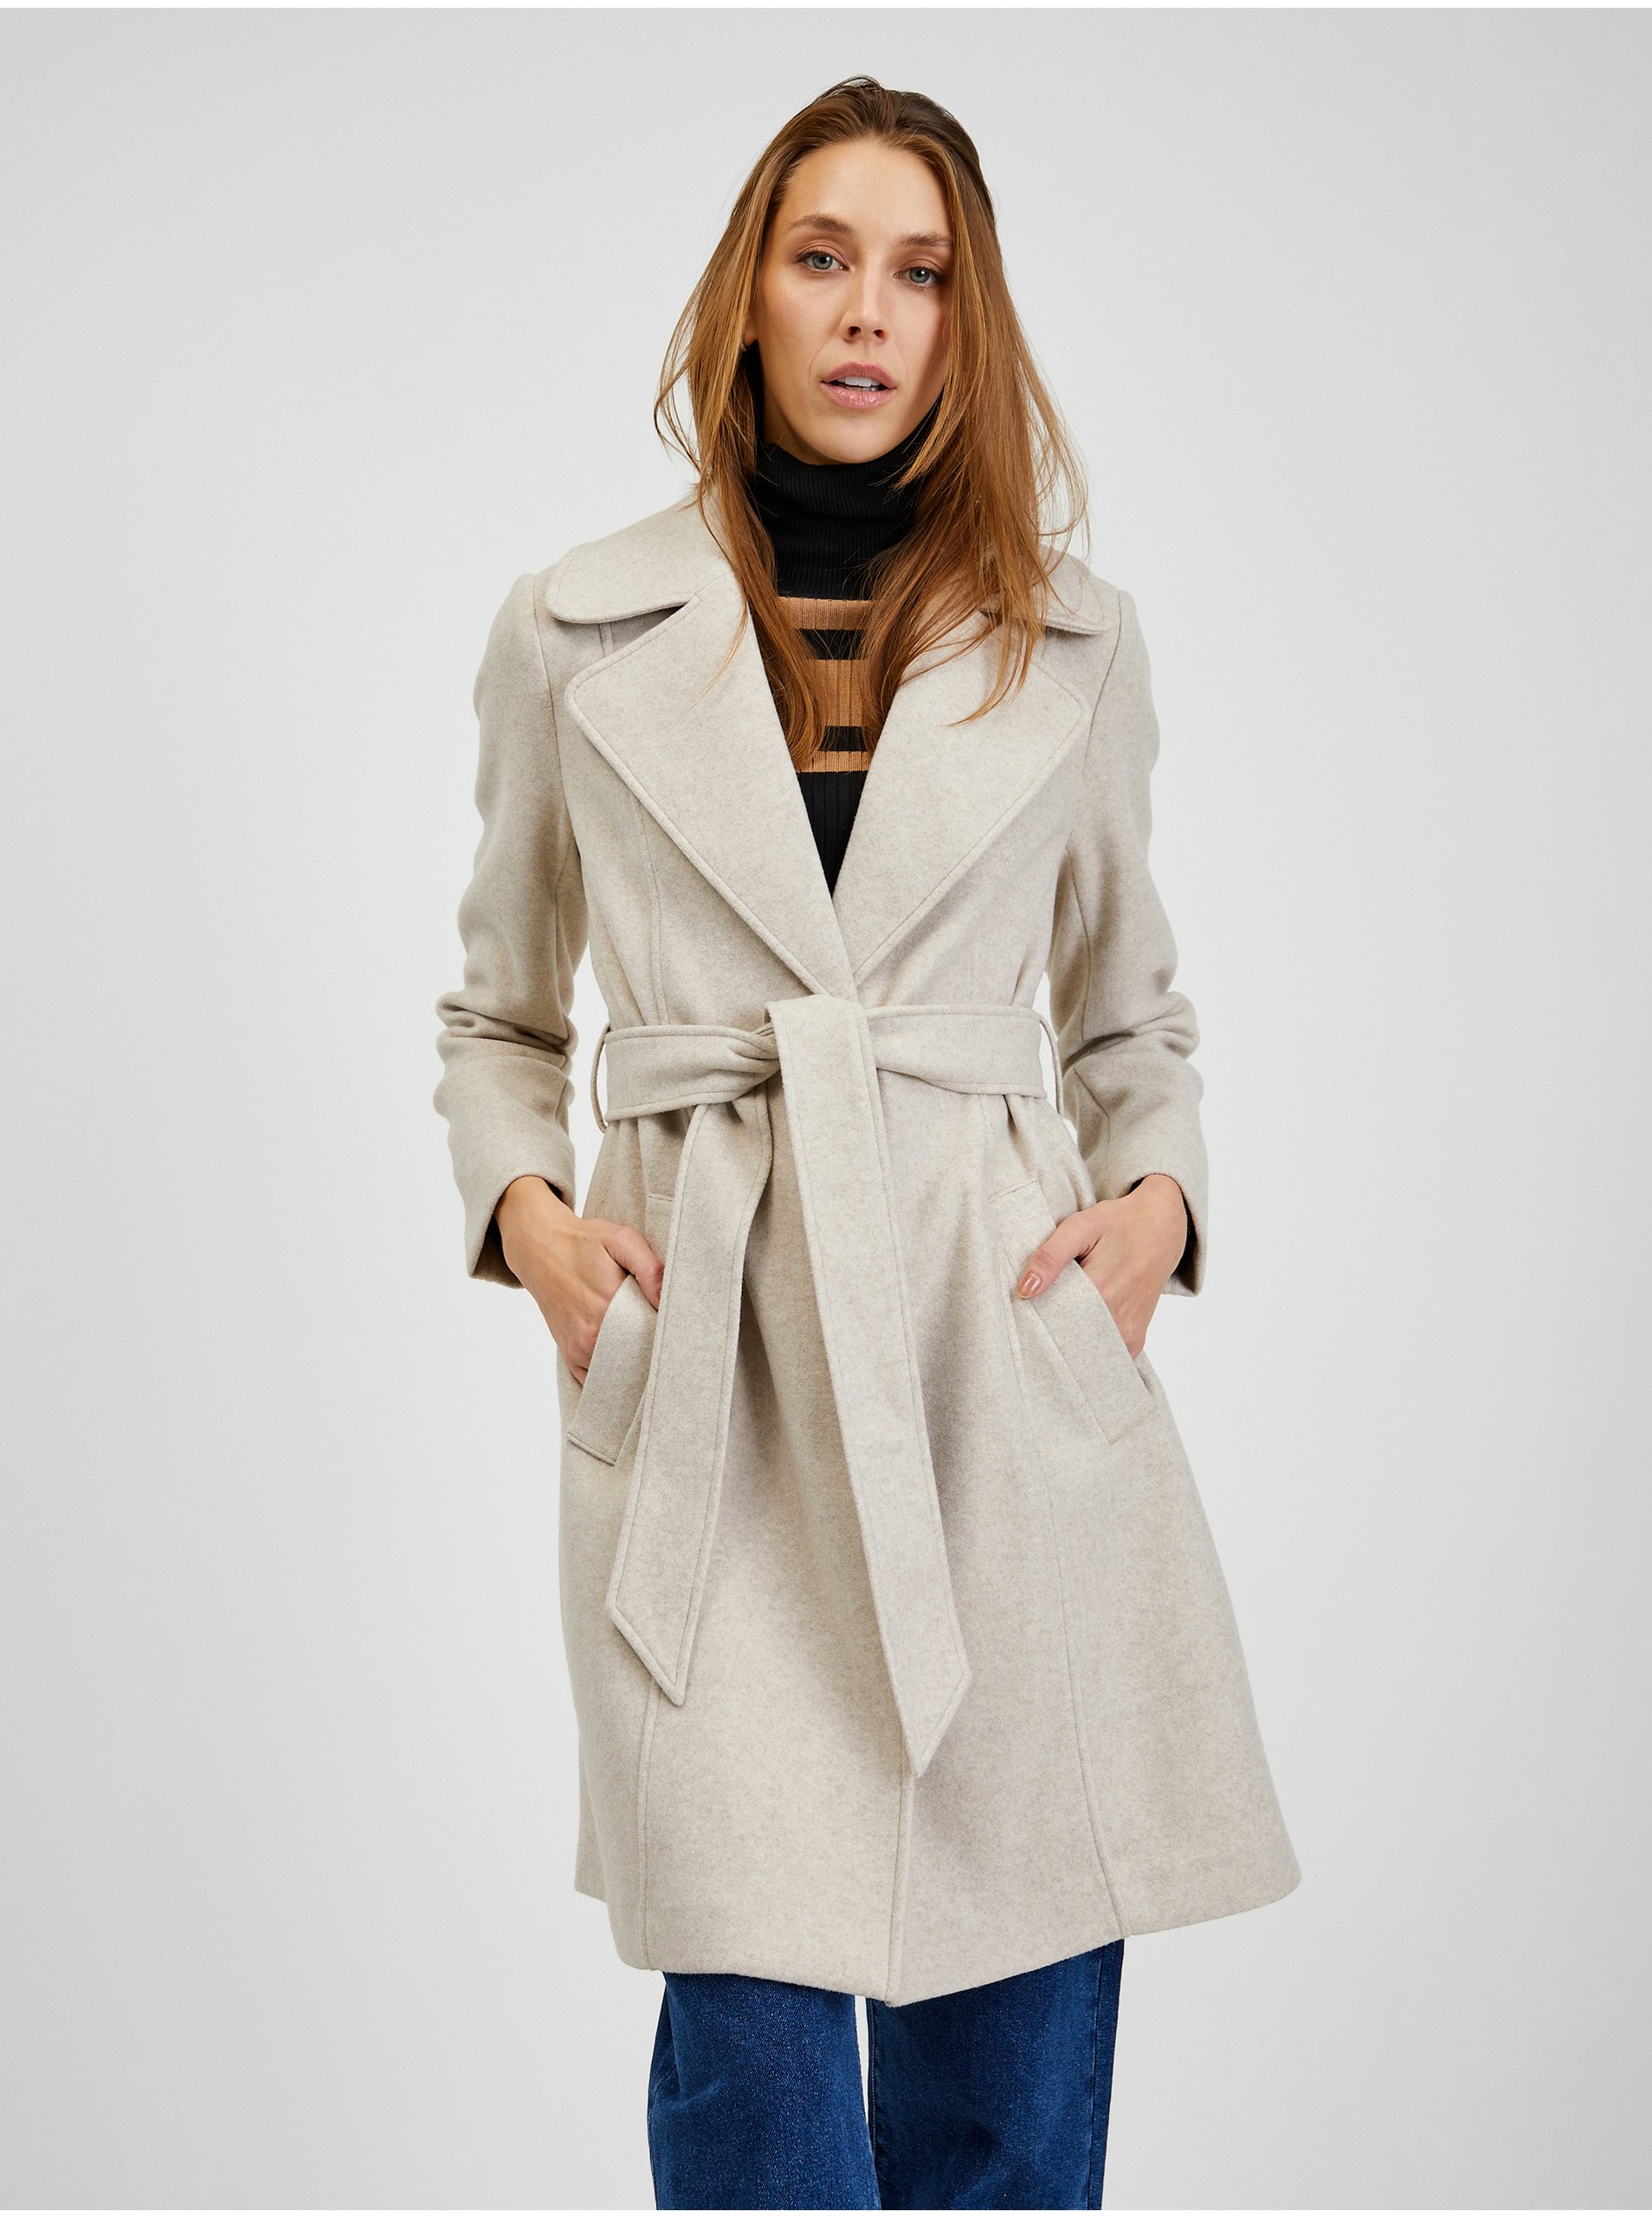 Orsay Beige Women's Winter Coat with Strap - Women